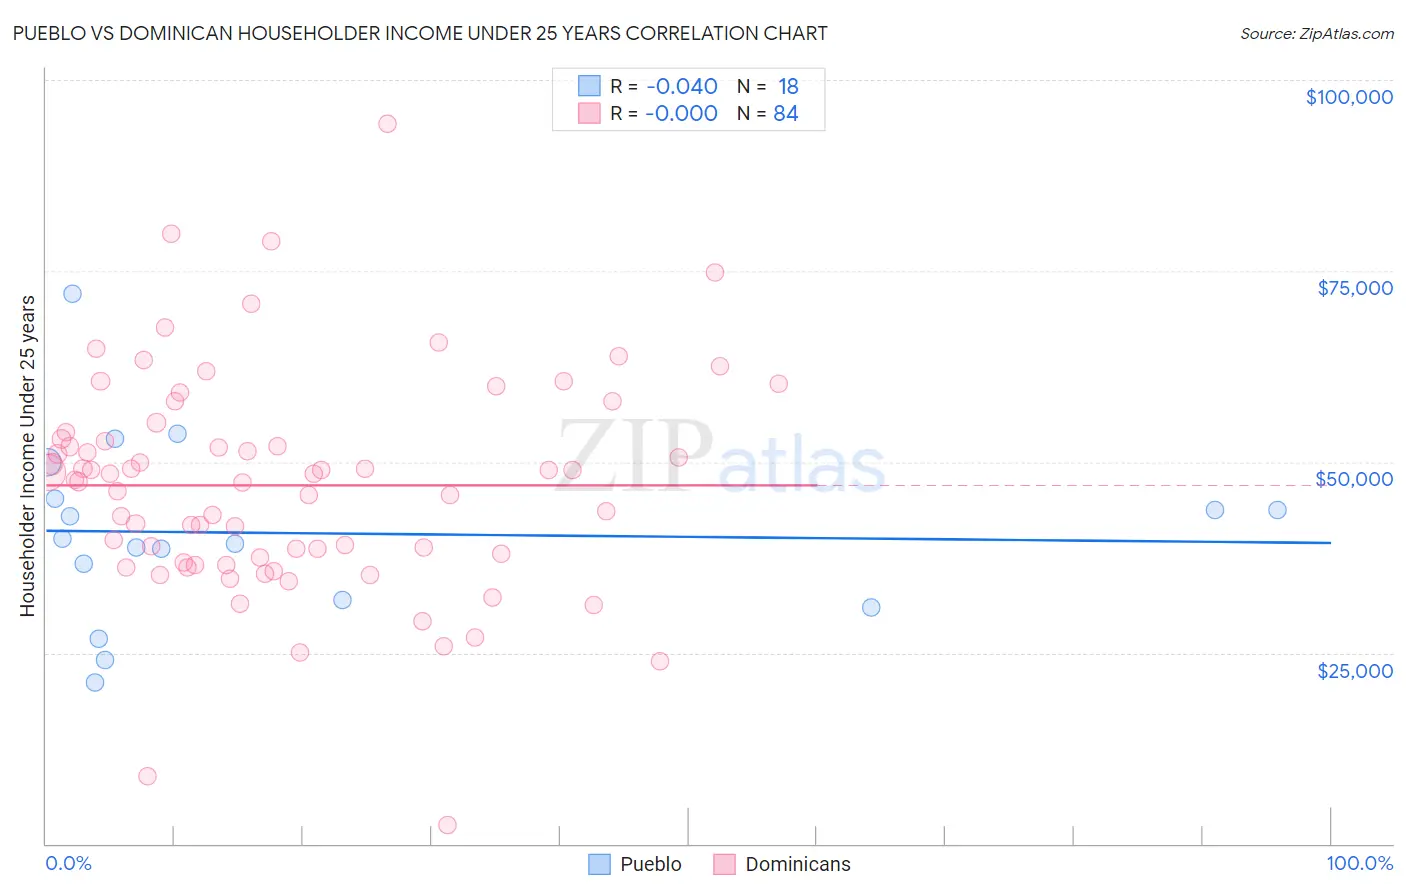 Pueblo vs Dominican Householder Income Under 25 years